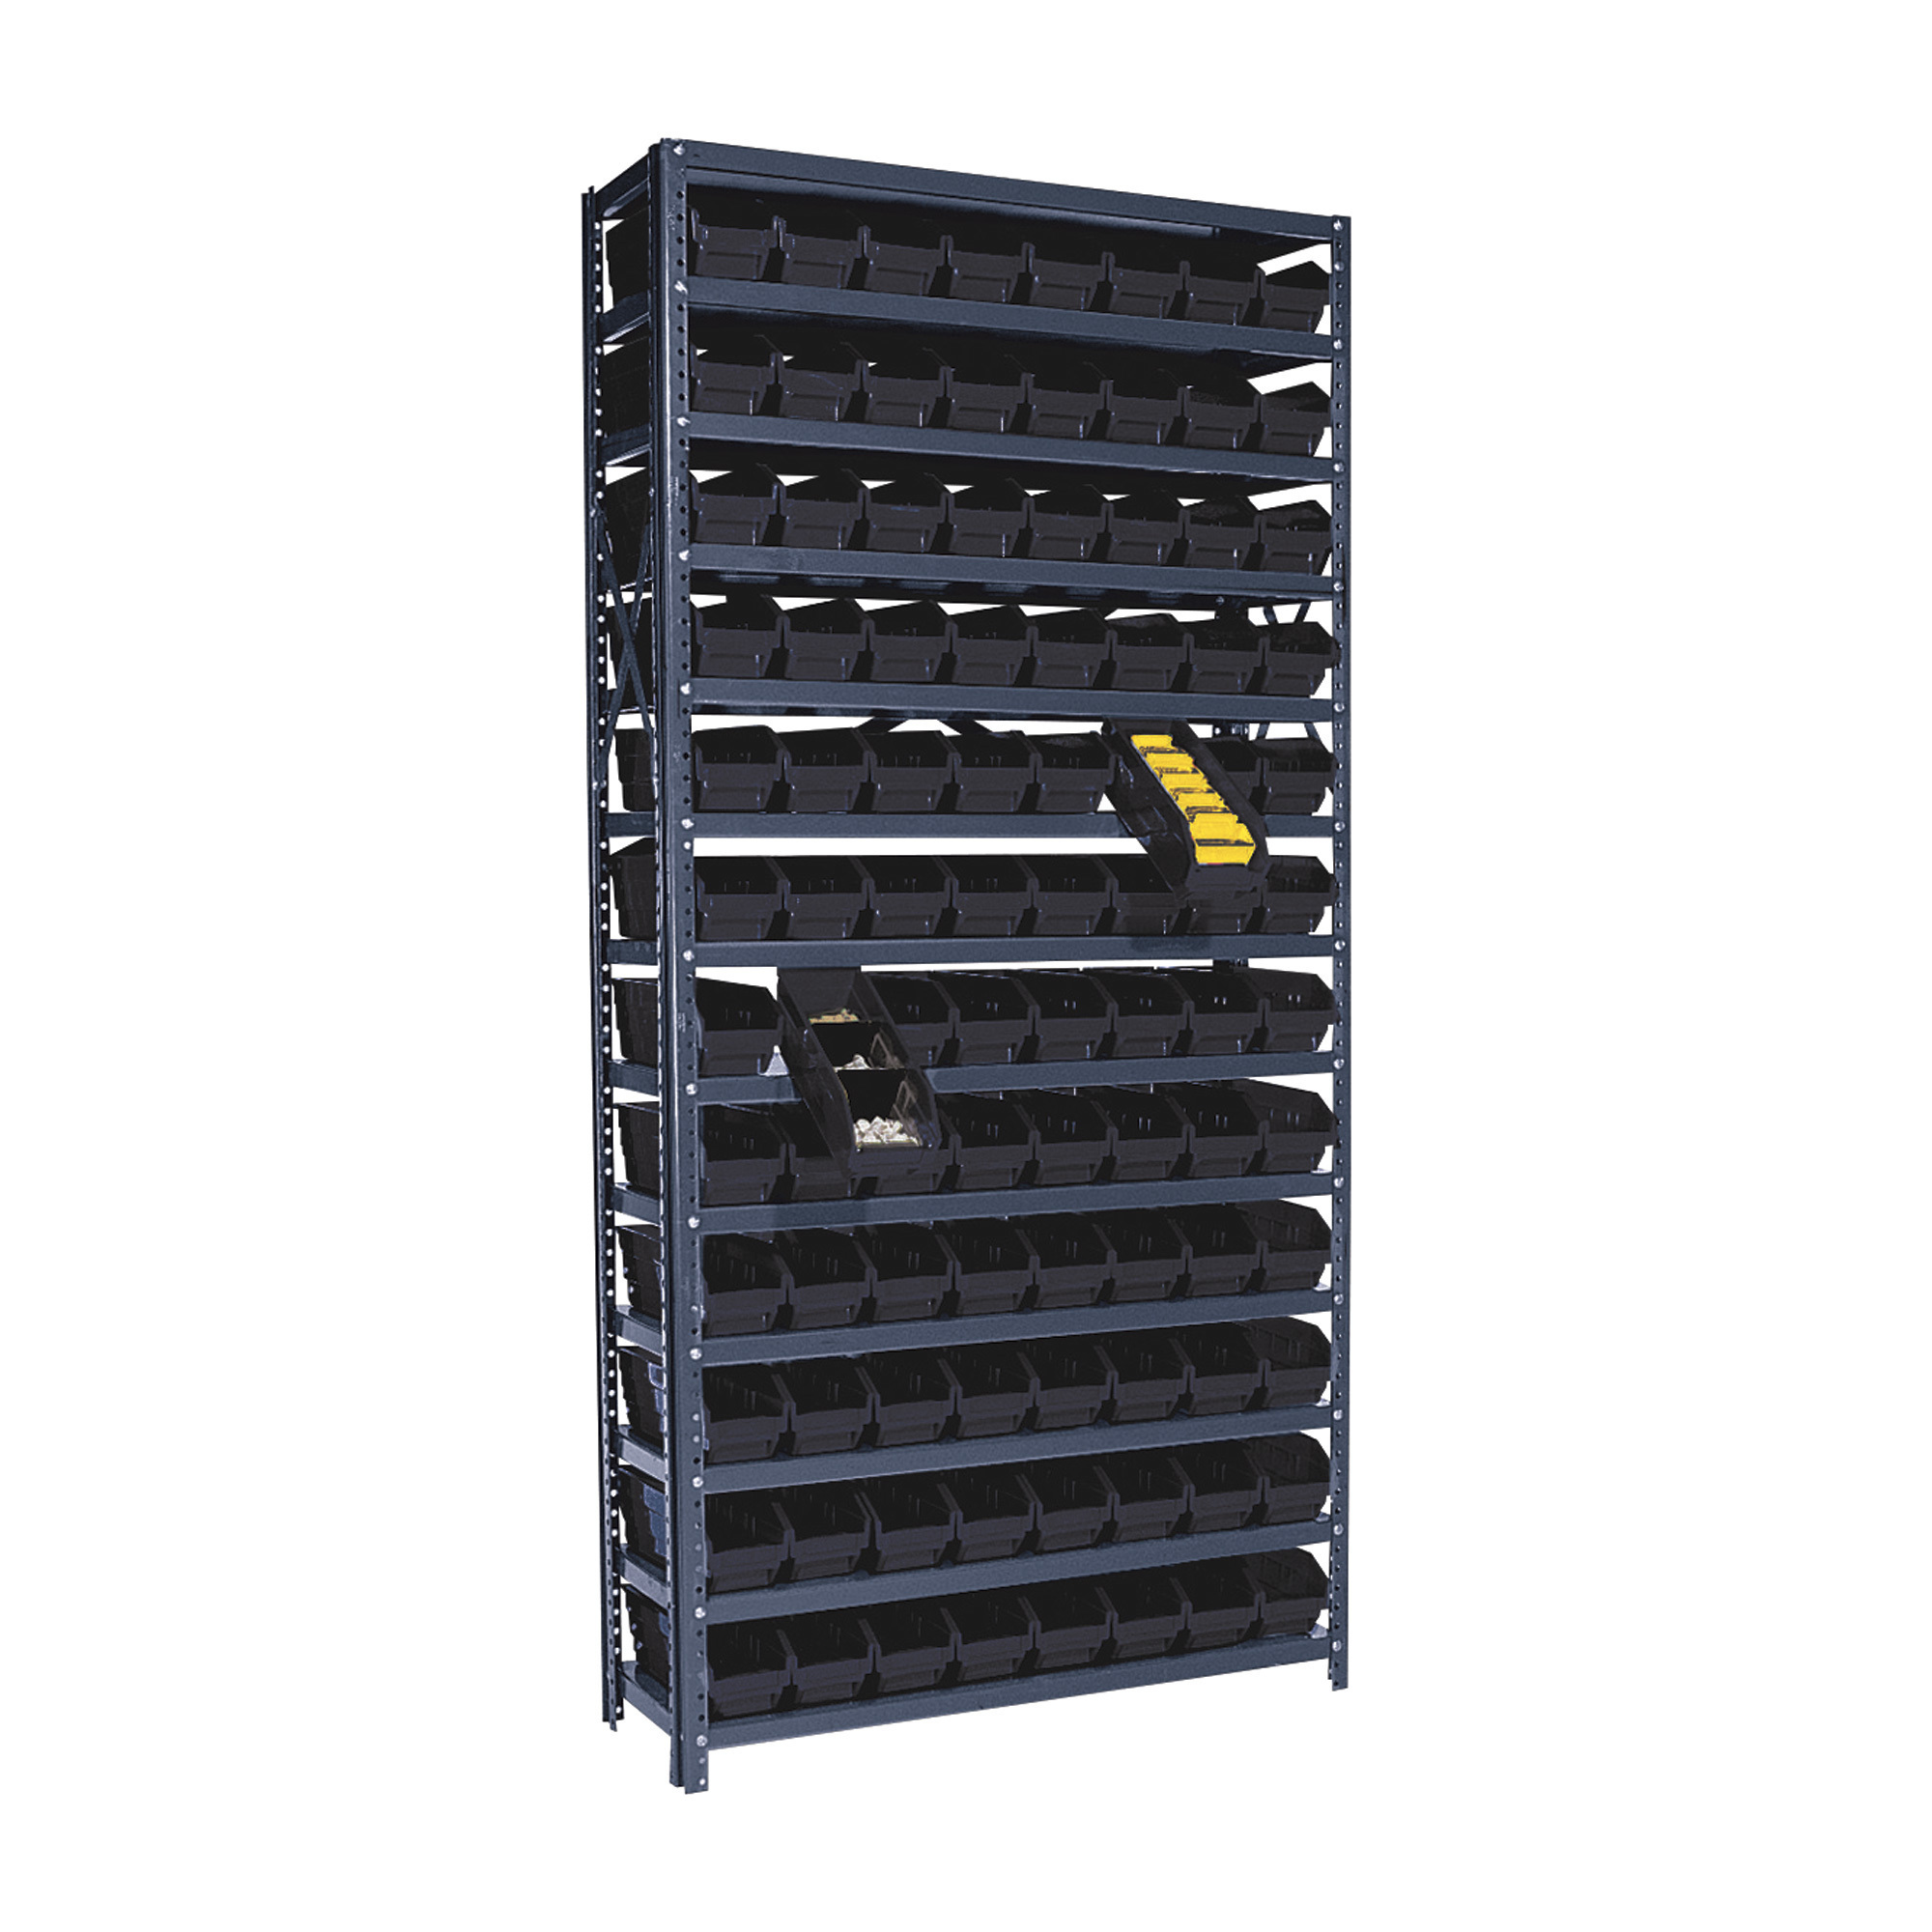 Quantum Storage Single Side Metal Shelving Unit With 96 Bins, 12Inch x 36Inch x 75Inch Rack Size, Black, Model 1275-101BK